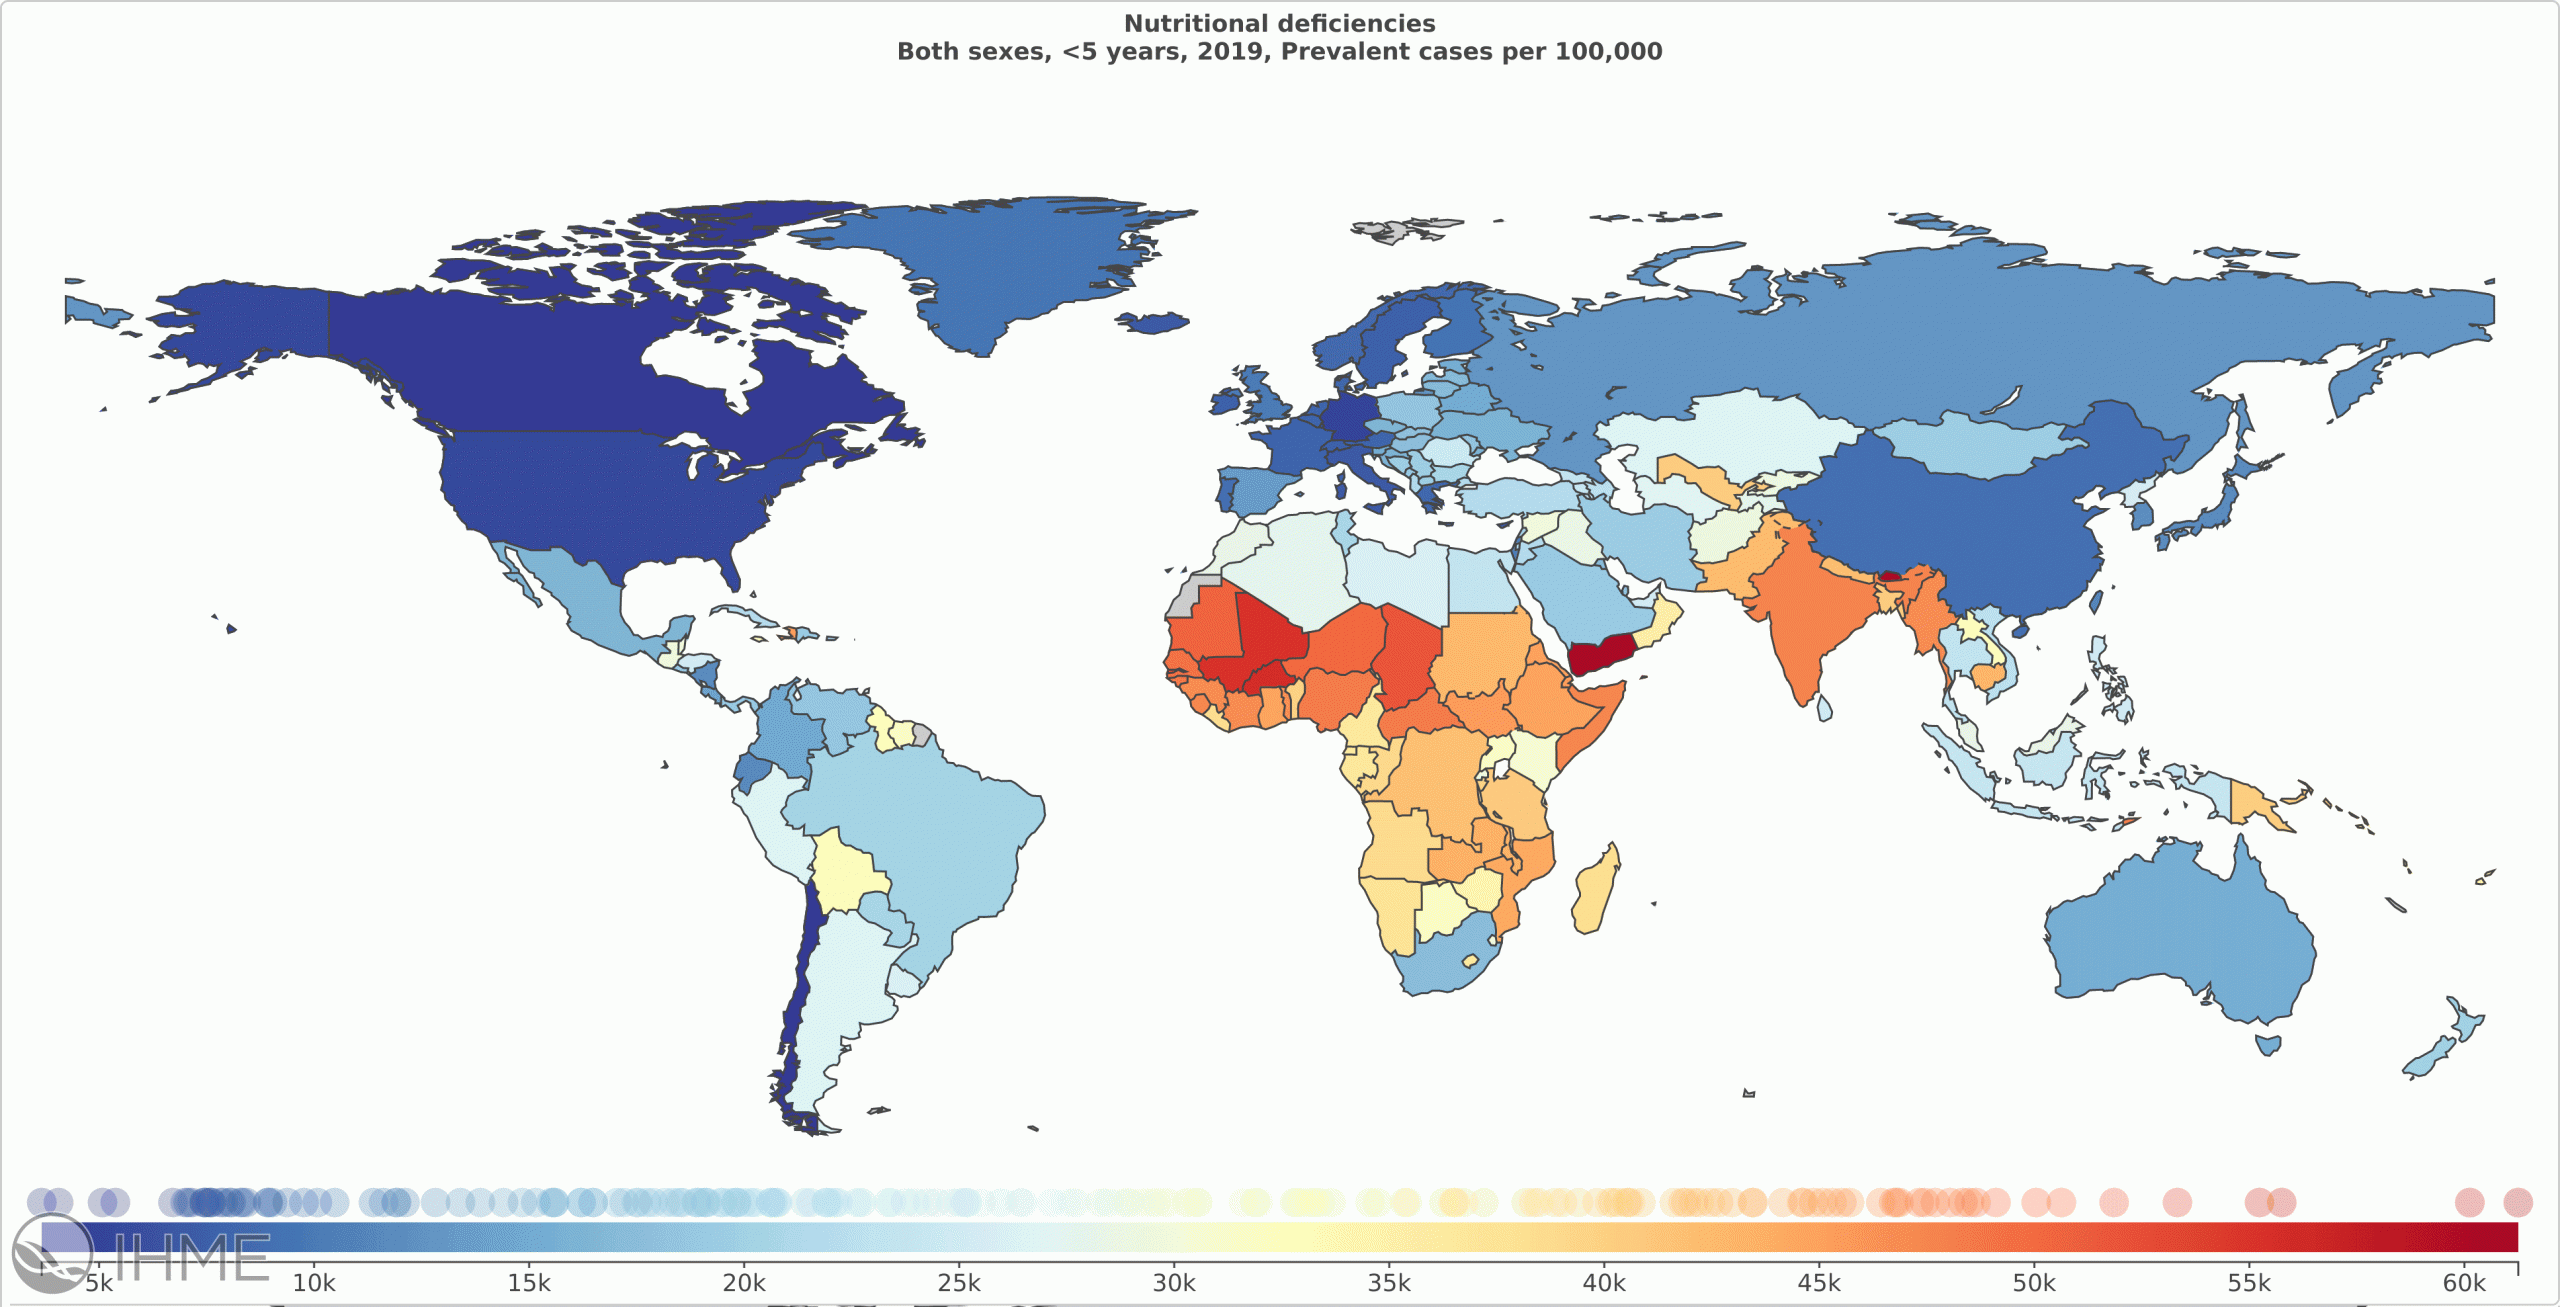 deficiencies in children under 5 by country